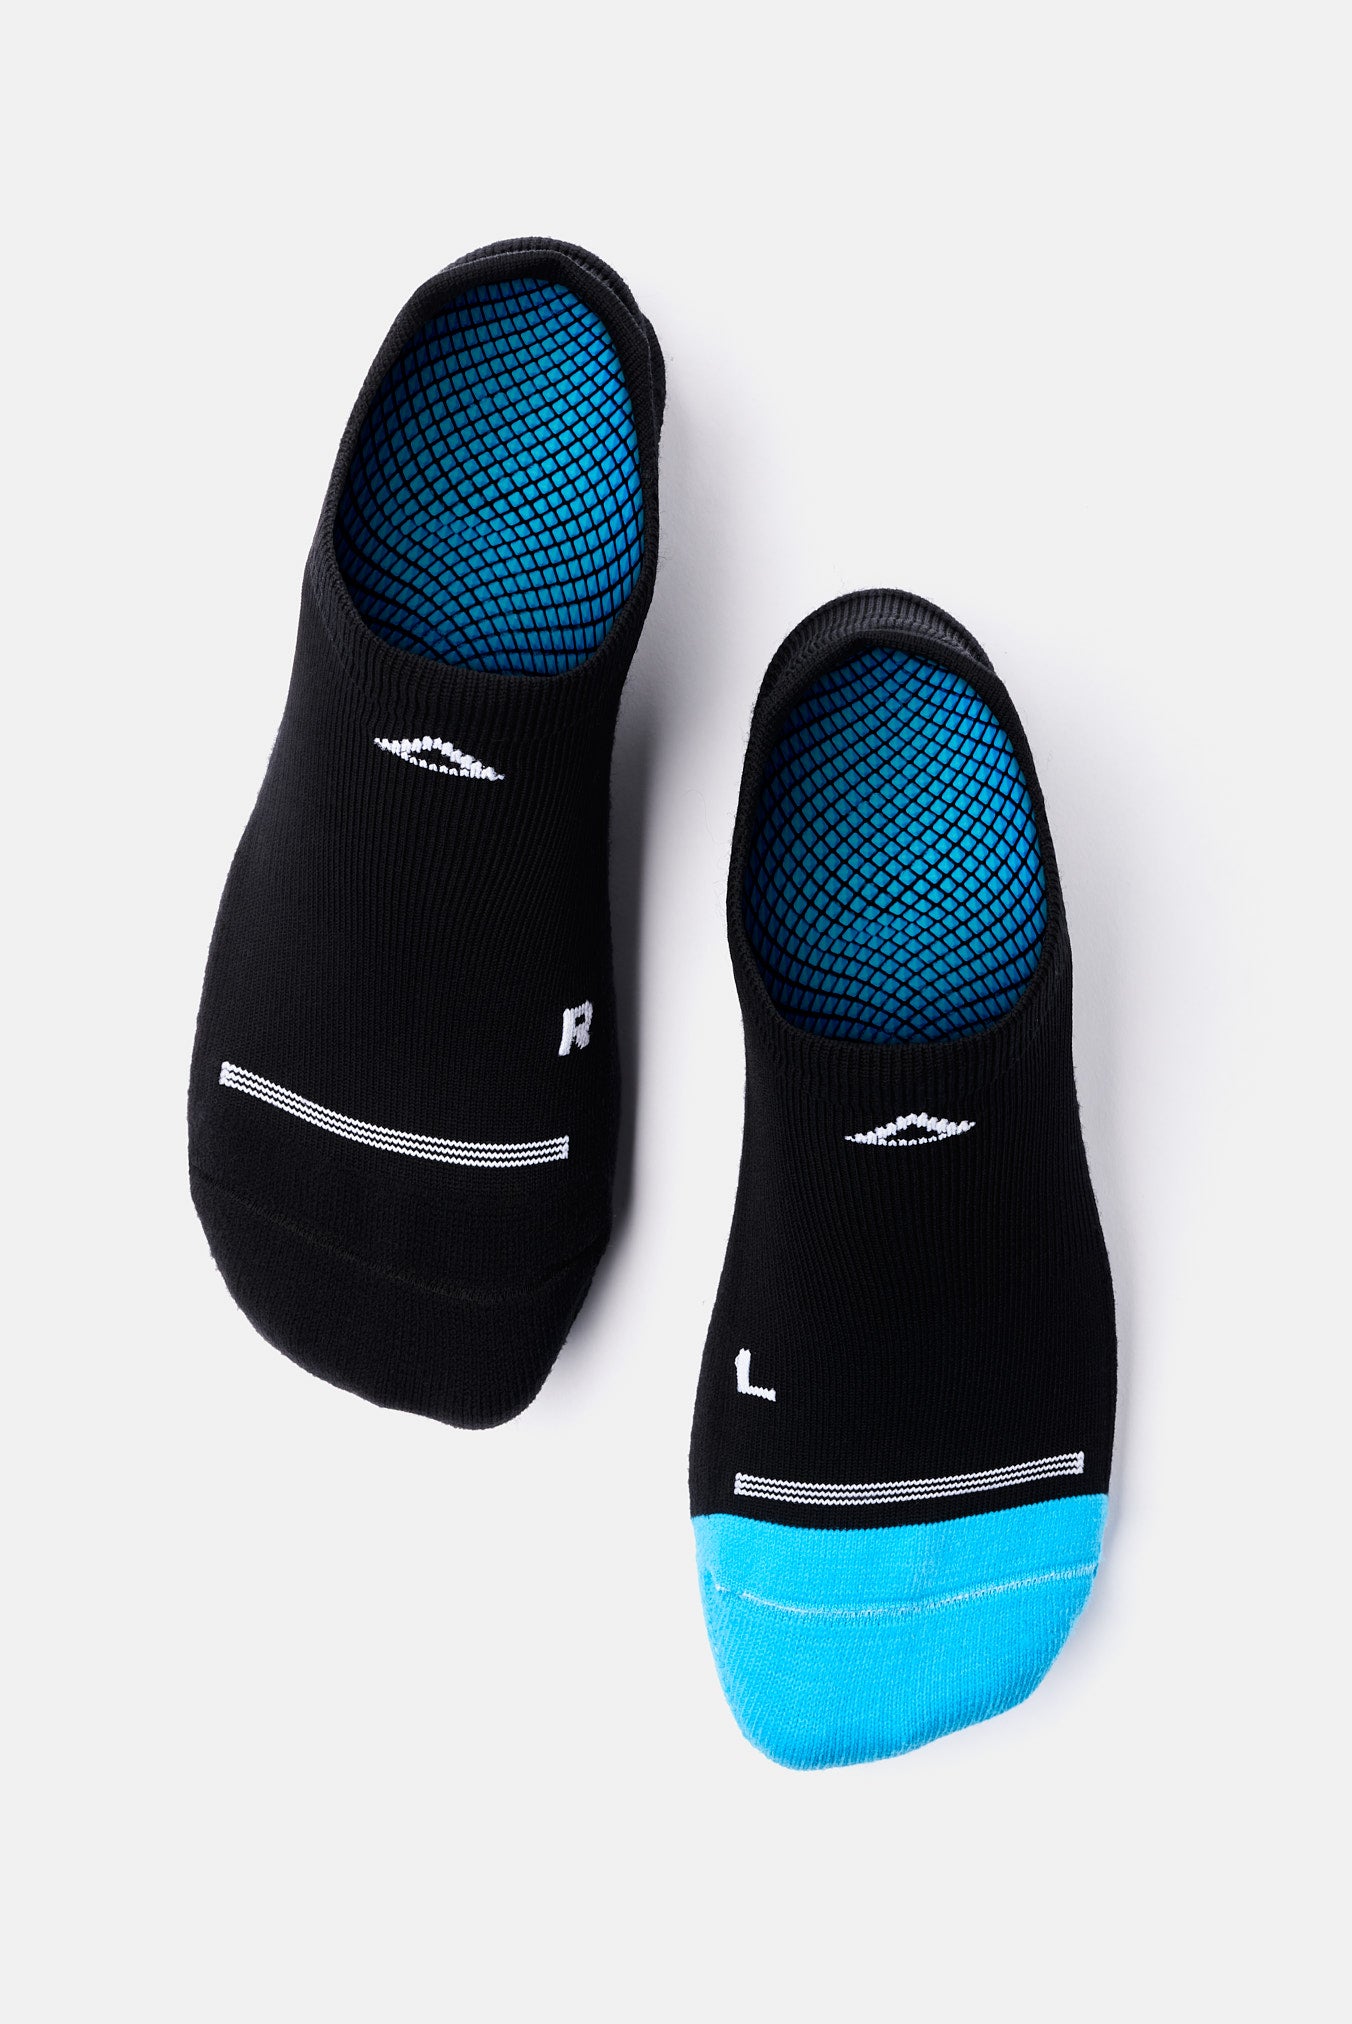 Naboso Recovery Socks with Stimulating Texture – Naboso Technology 